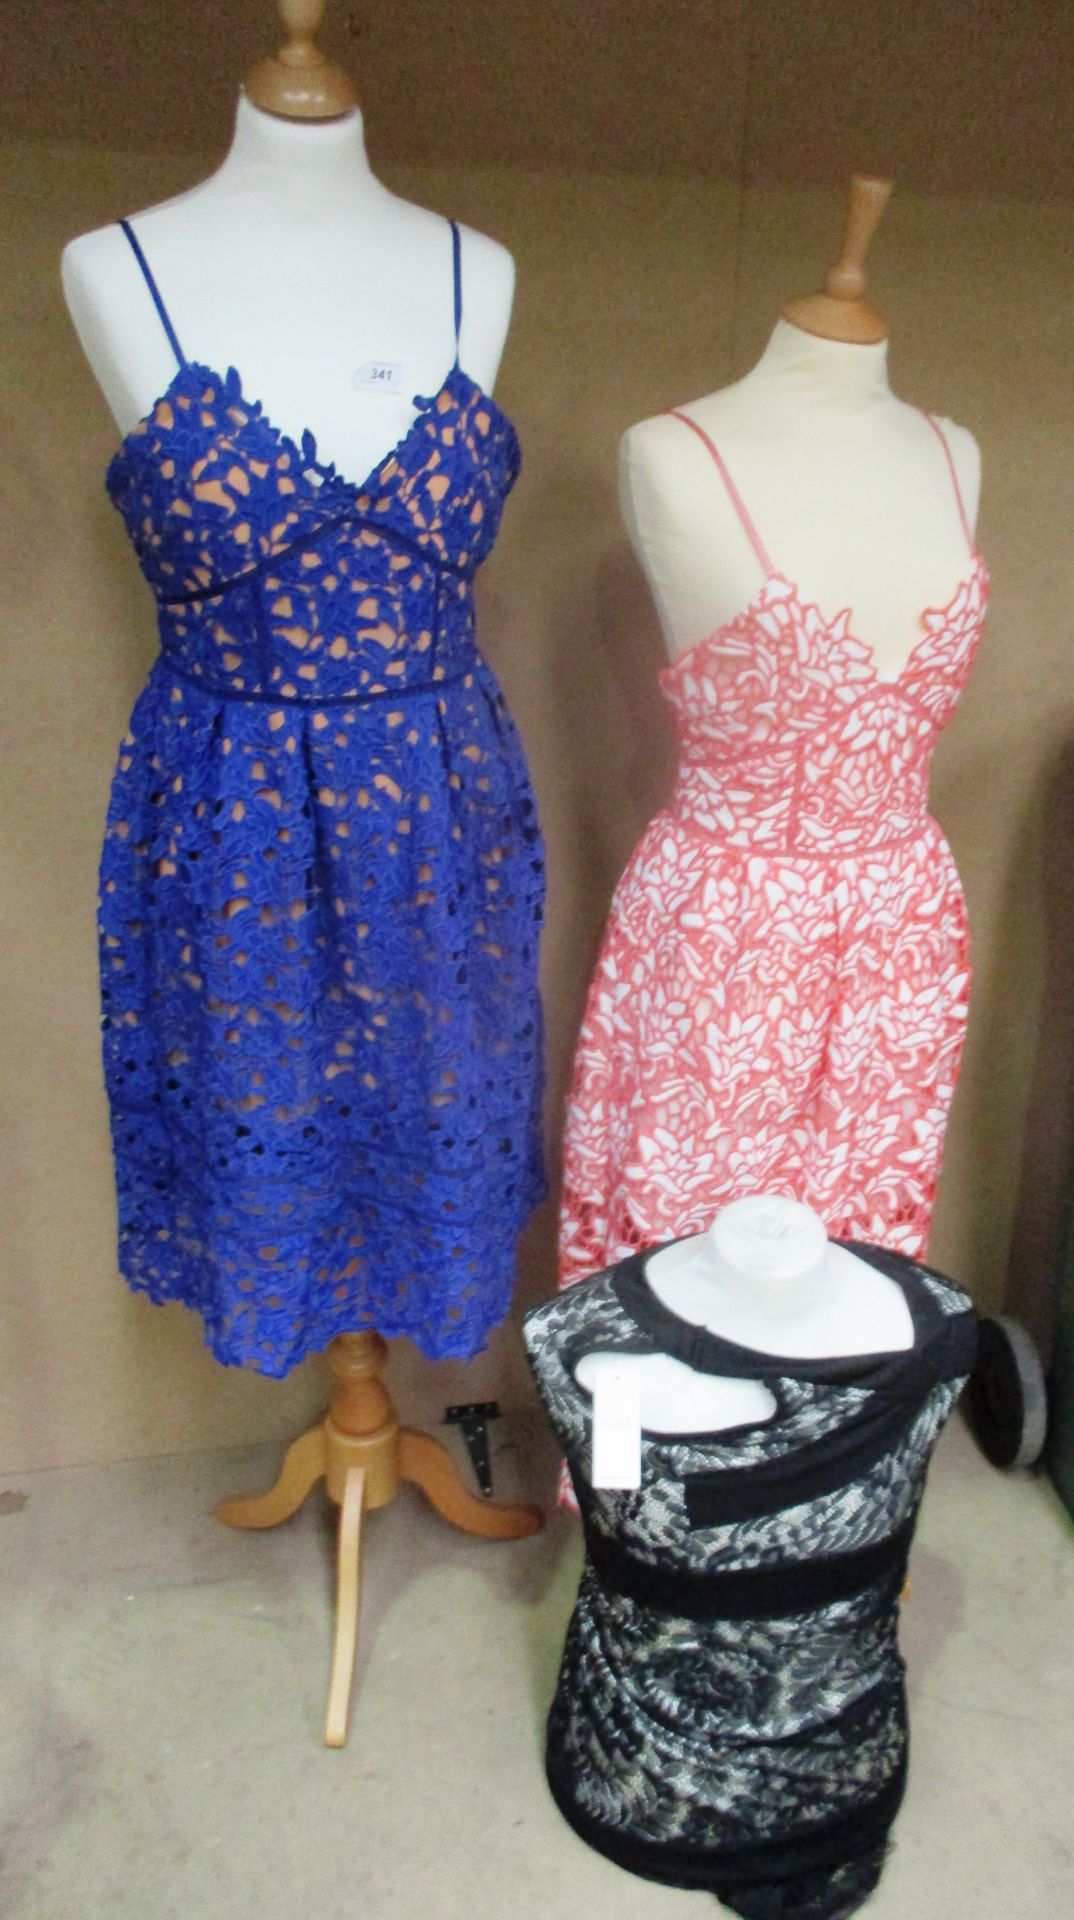 150 x items of ladies clothing by Shopaholic